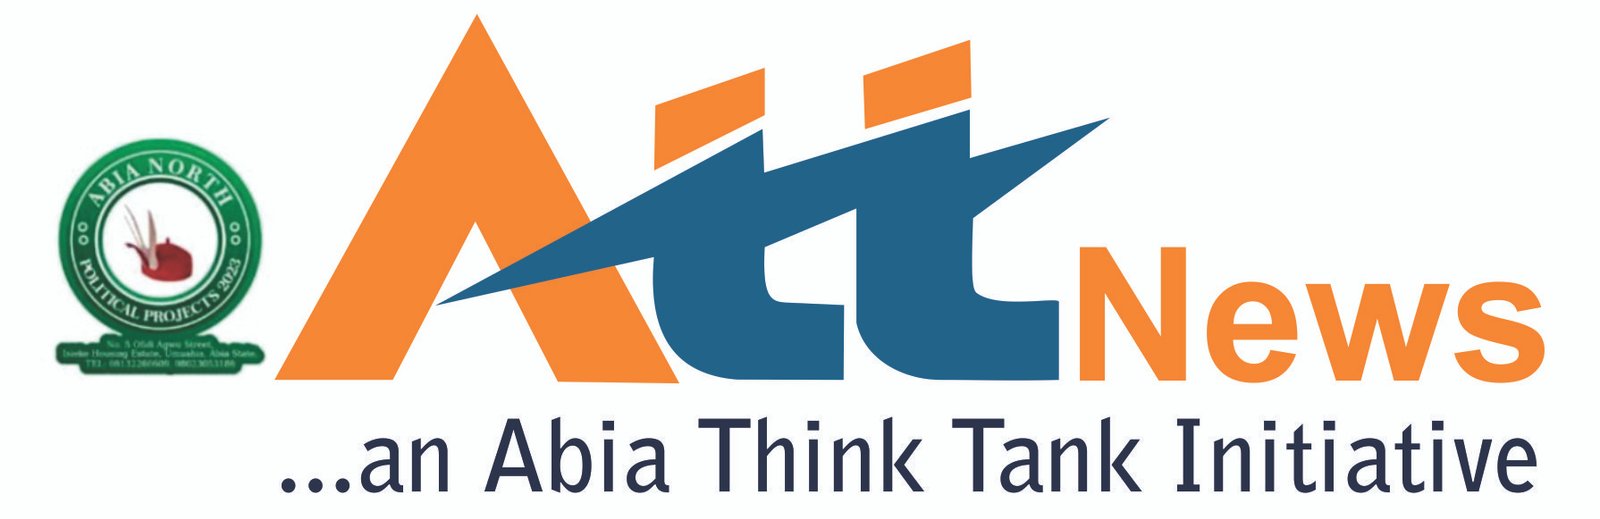 Abia ThinkTank News